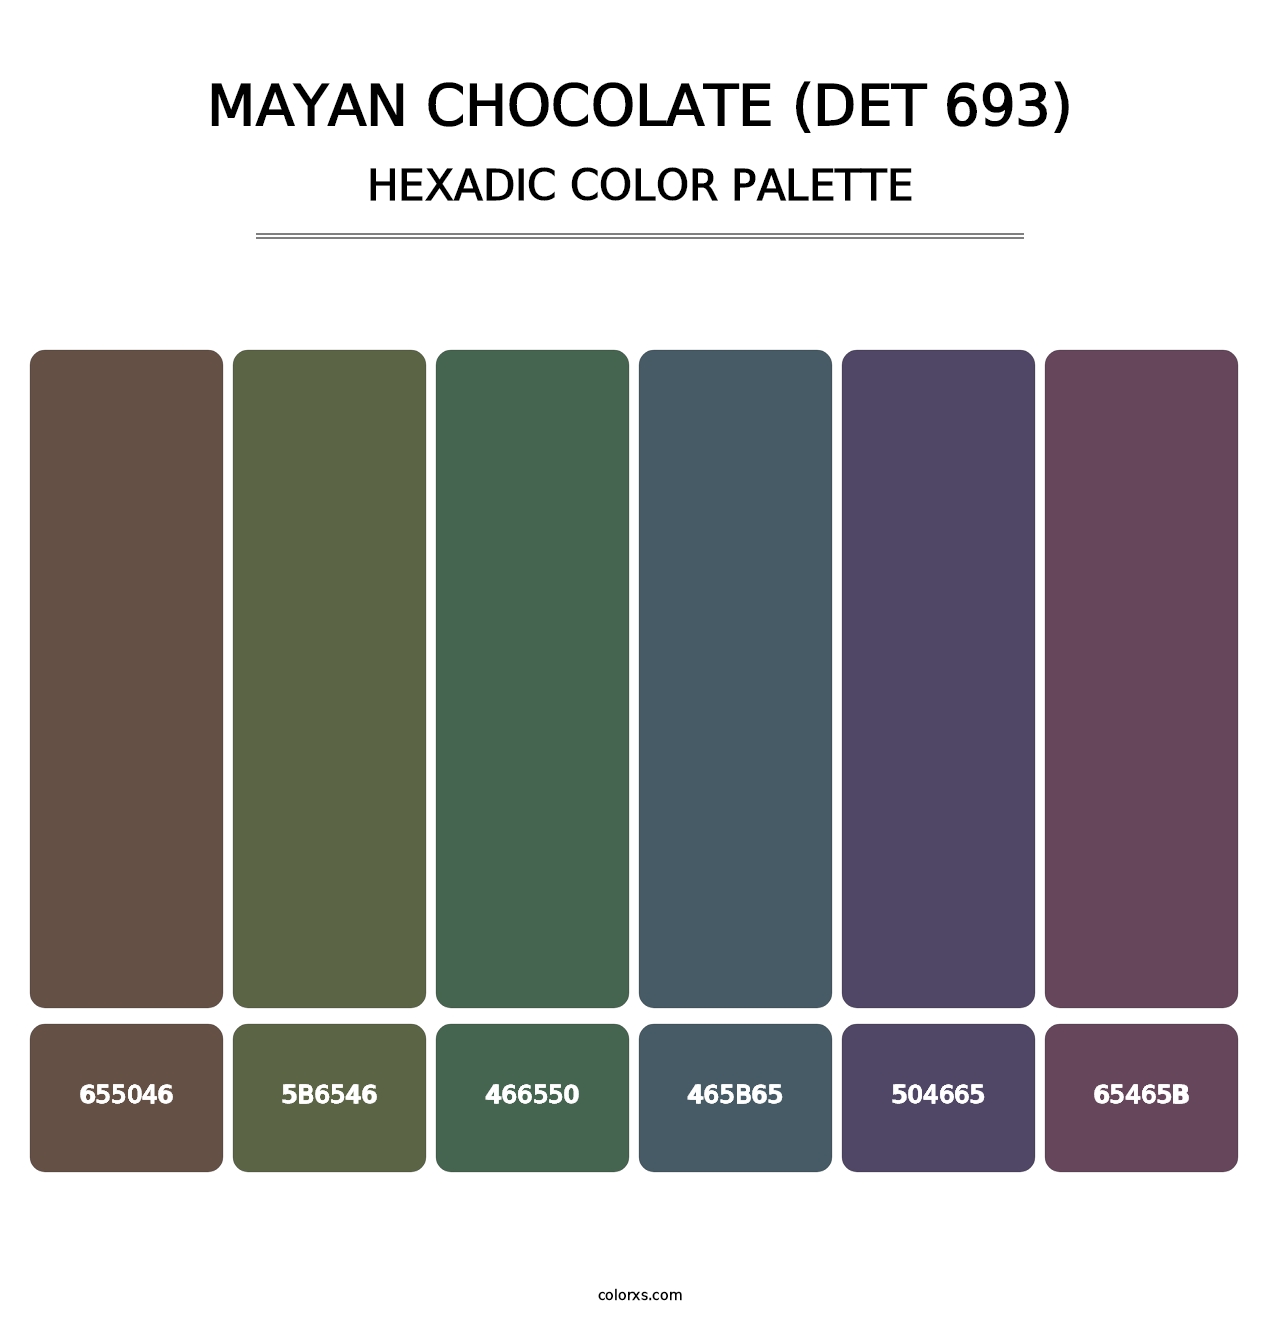 Mayan Chocolate (DET 693) - Hexadic Color Palette